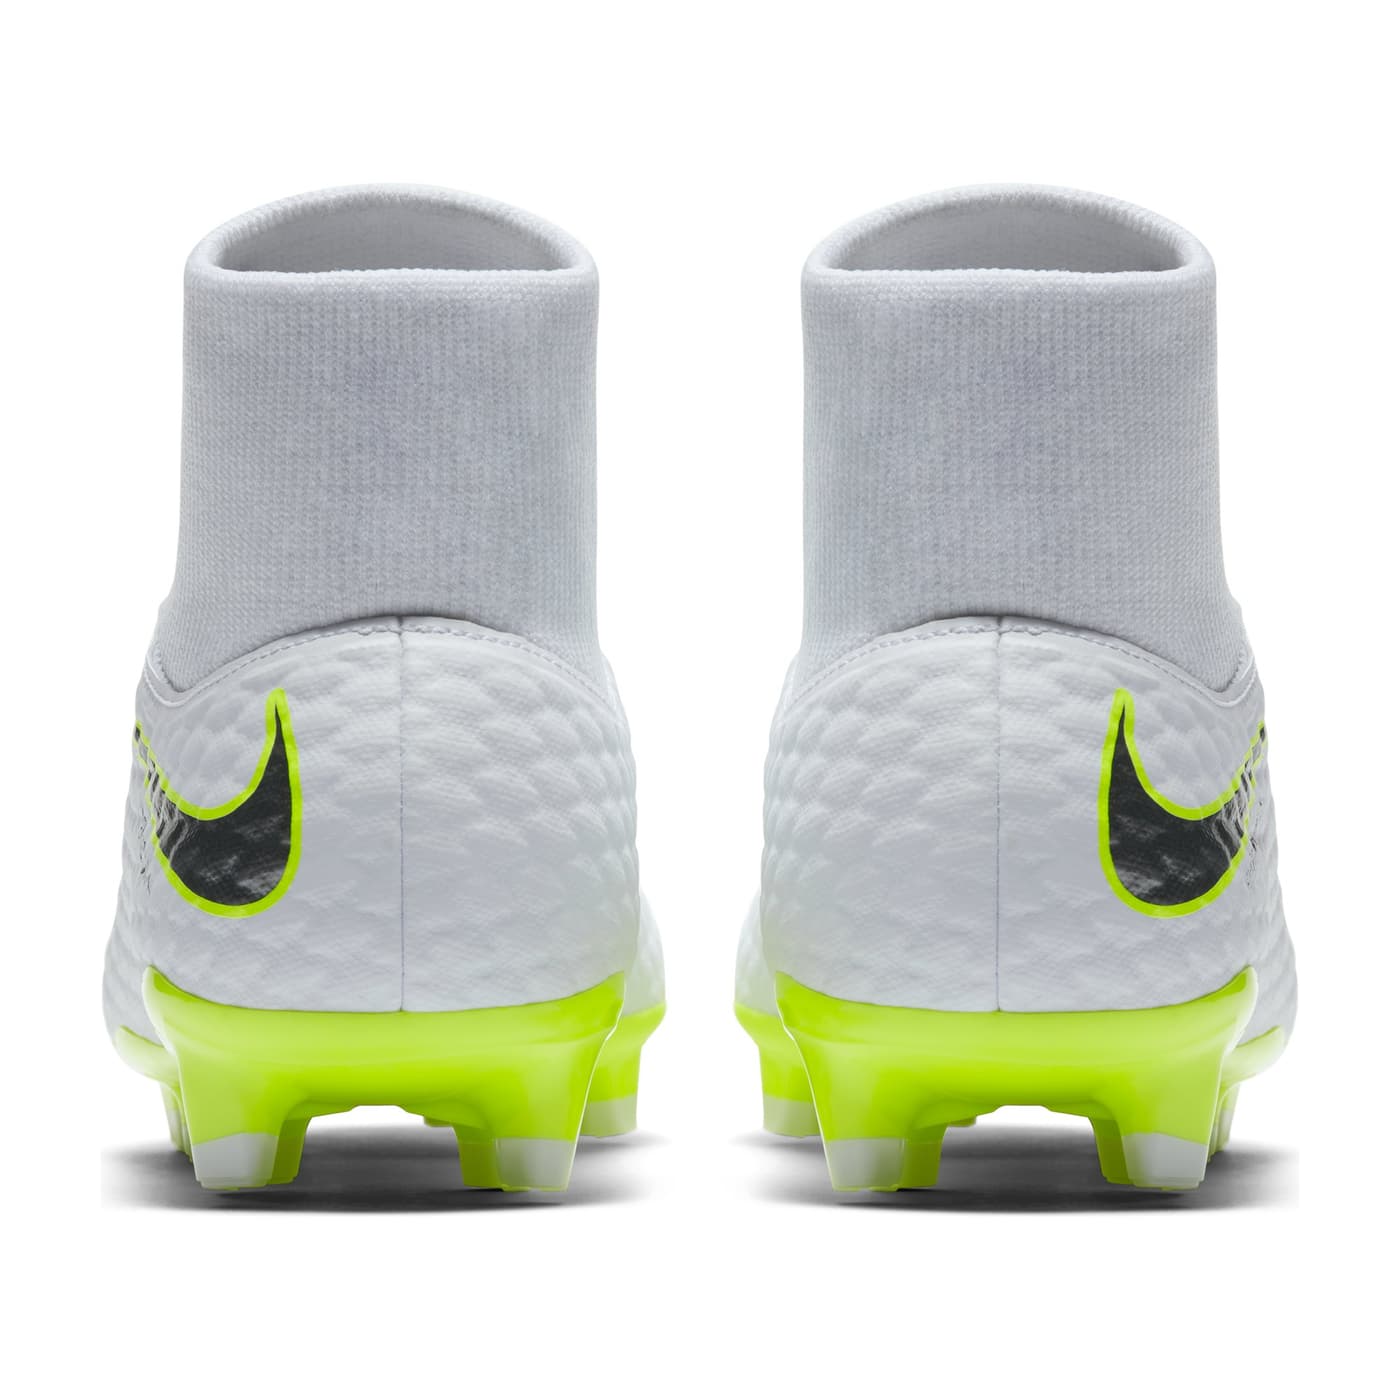 Nike Hypervenom Phantom III DF Play Fire FG Sock Football